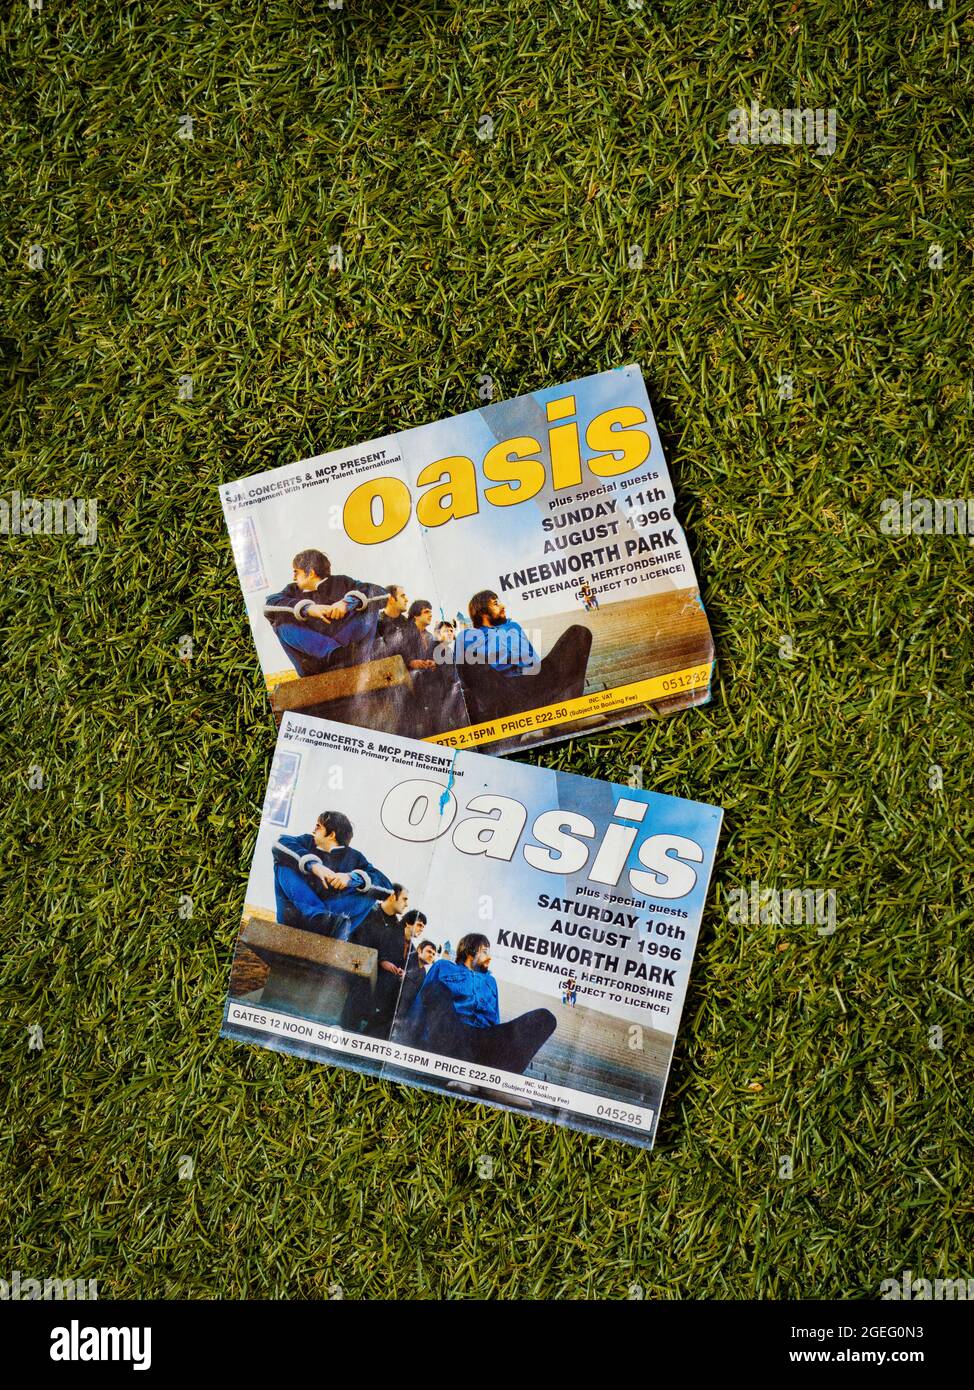 Billet pour un concert Oasis au Knebworth Park, Stevenage, Hertfordshire, Grande-Bretagne - samedi et dimanche 10/11 août 1996, Banque D'Images